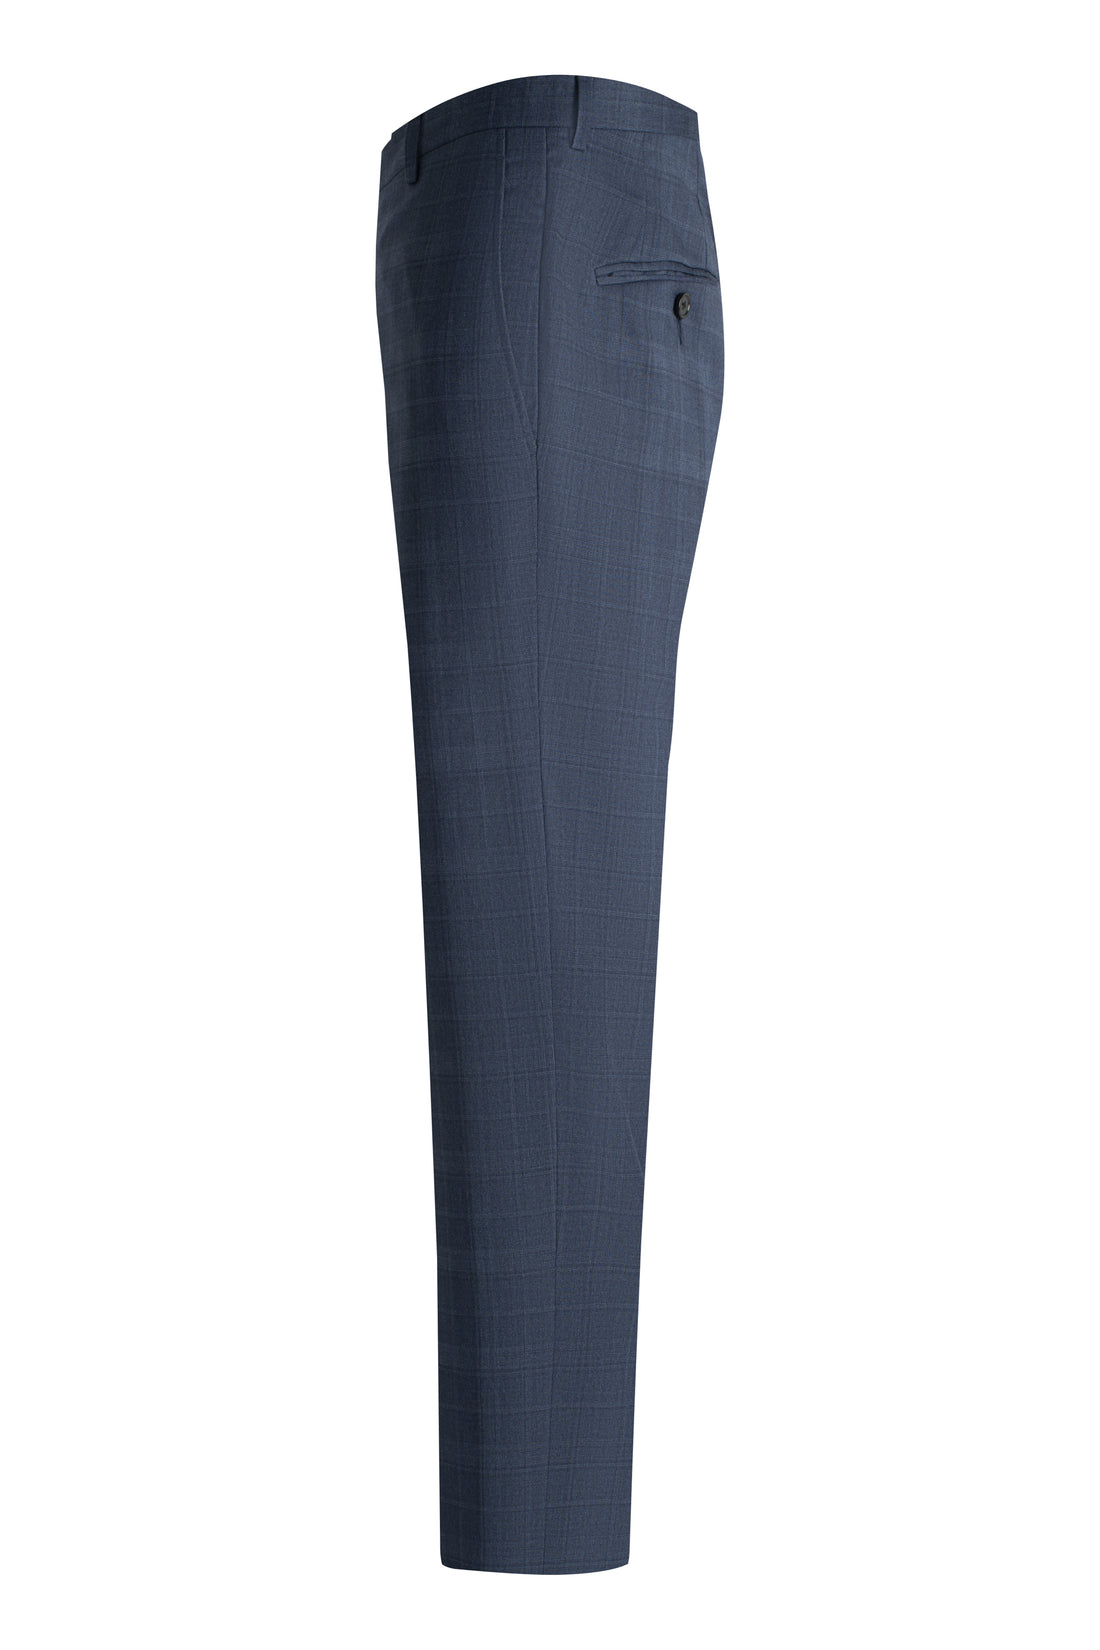 Slate Blue Plaid Suit Side pant